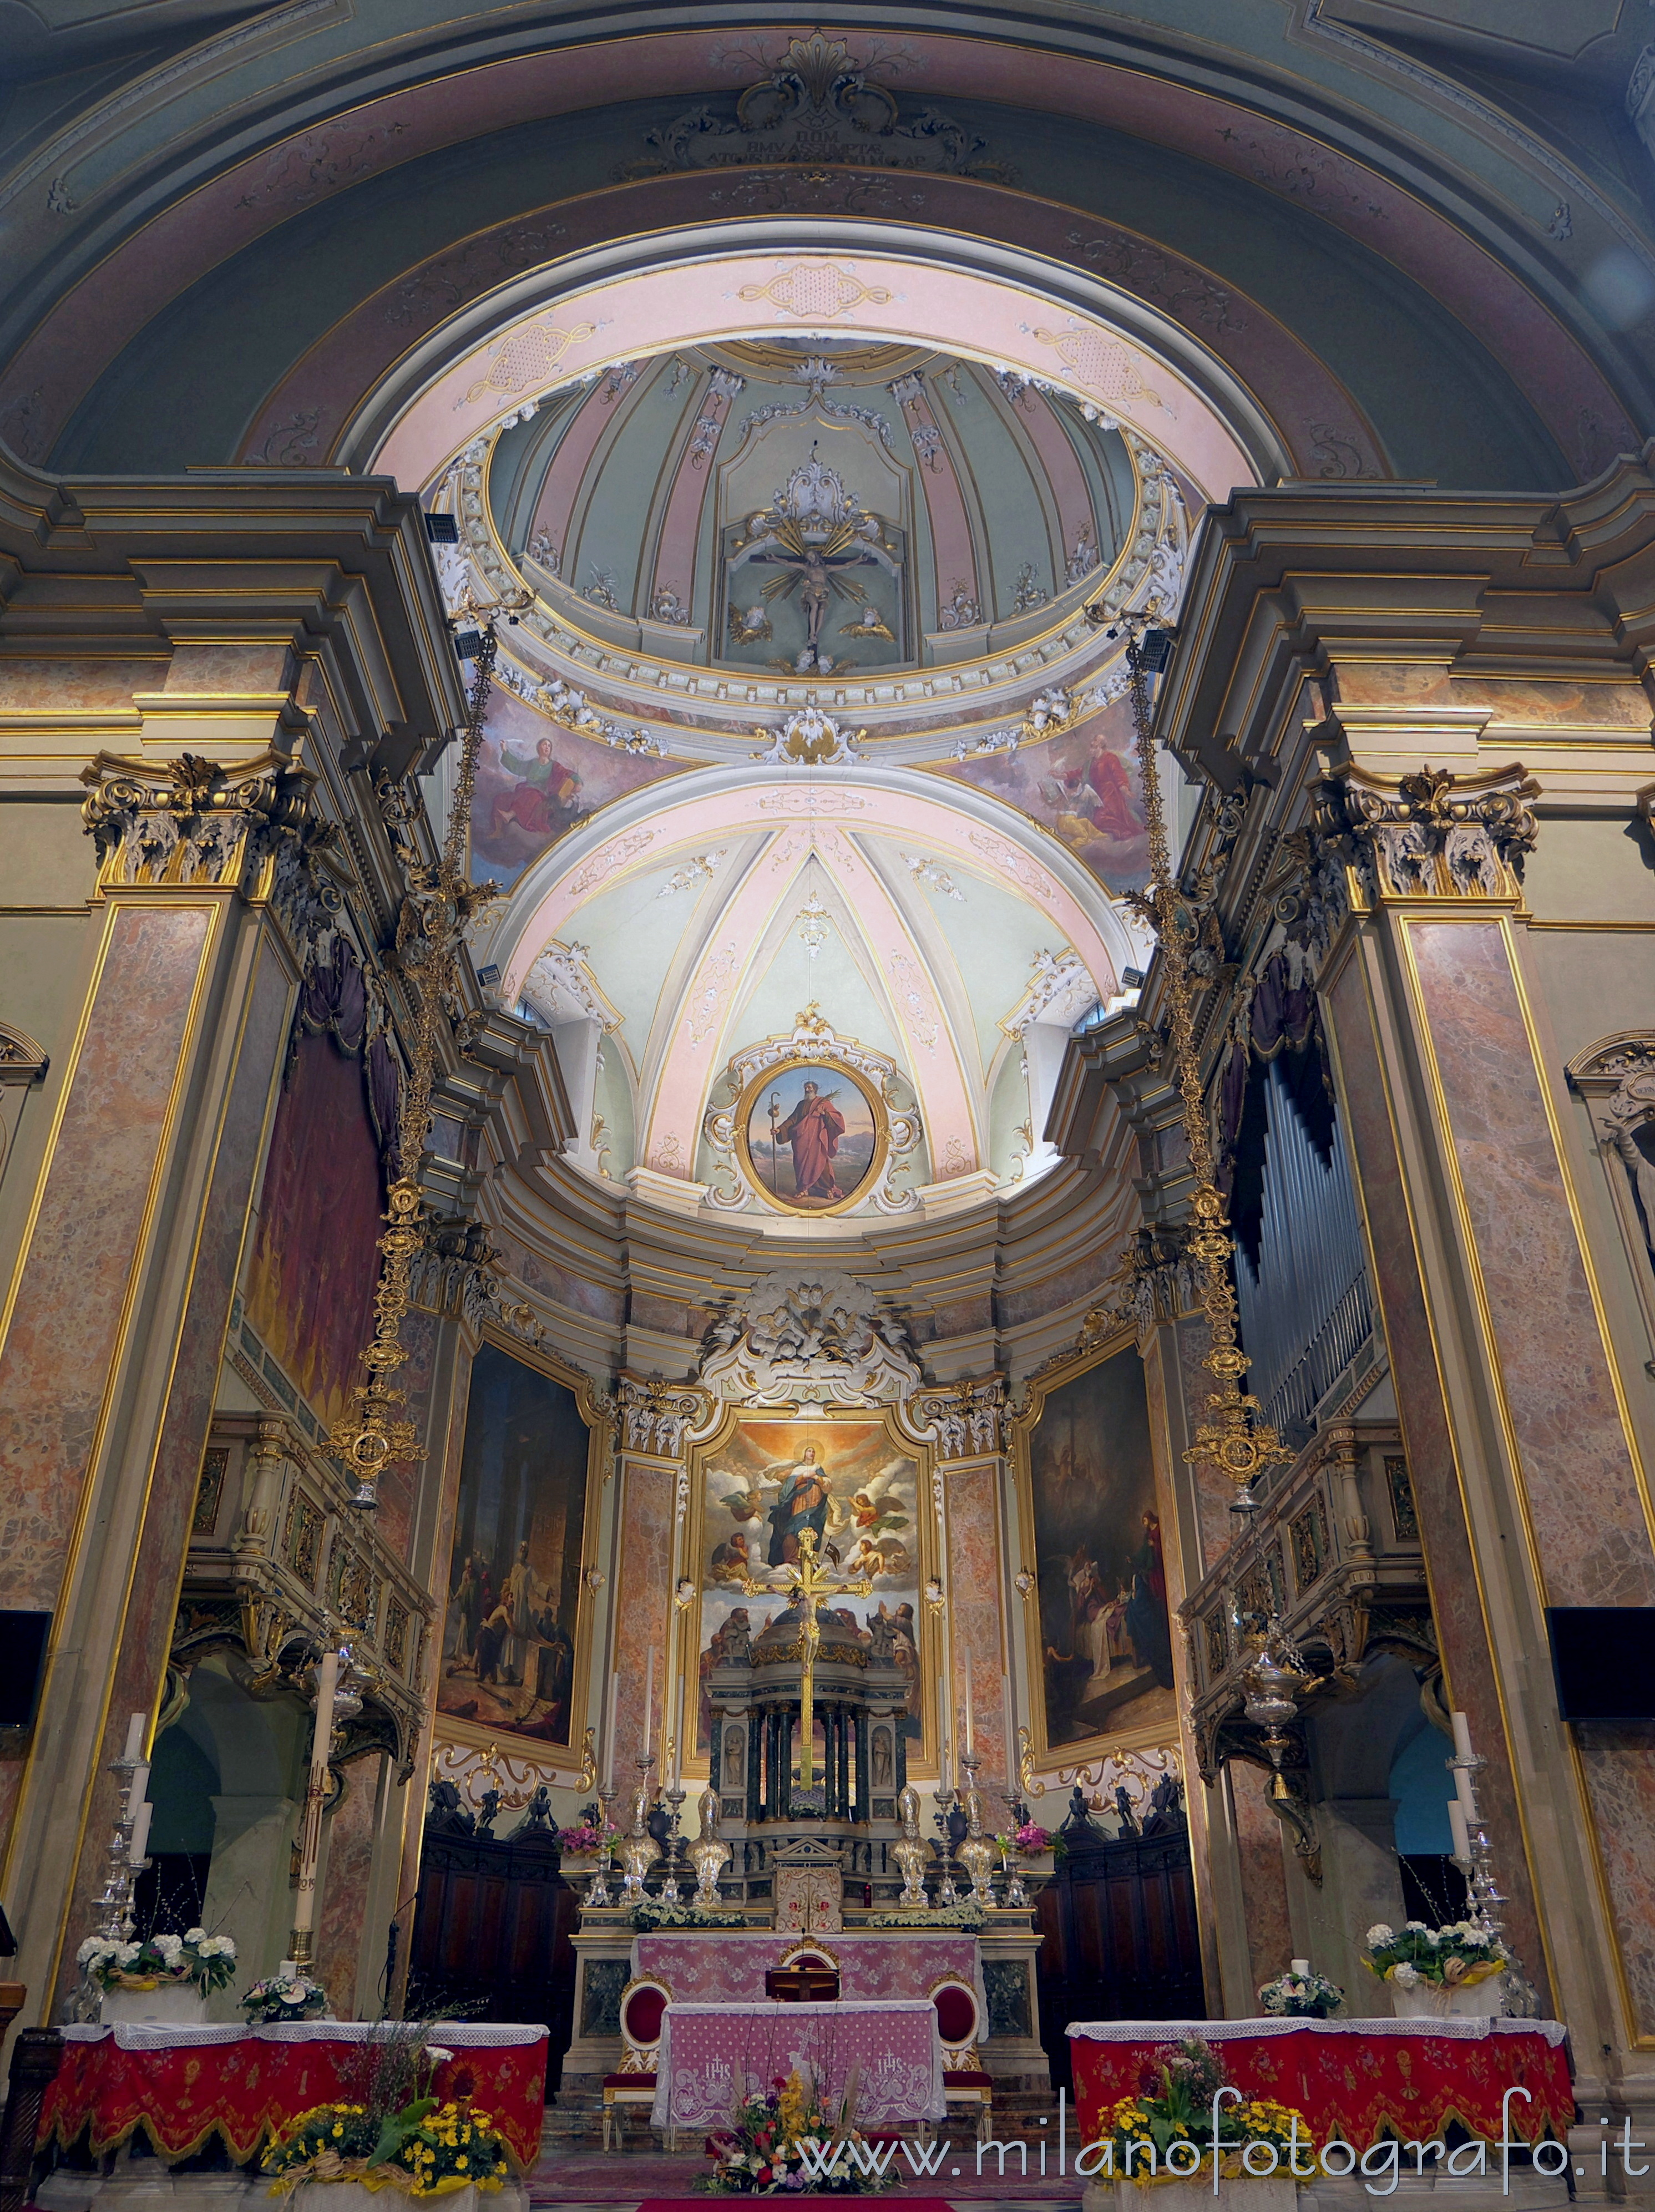 Romano di Lombardia (Bergamo, Italy): Apse of the Church of Santa Maria Assunta e San Giacomo Maggiore - Romano di Lombardia (Bergamo, Italy)